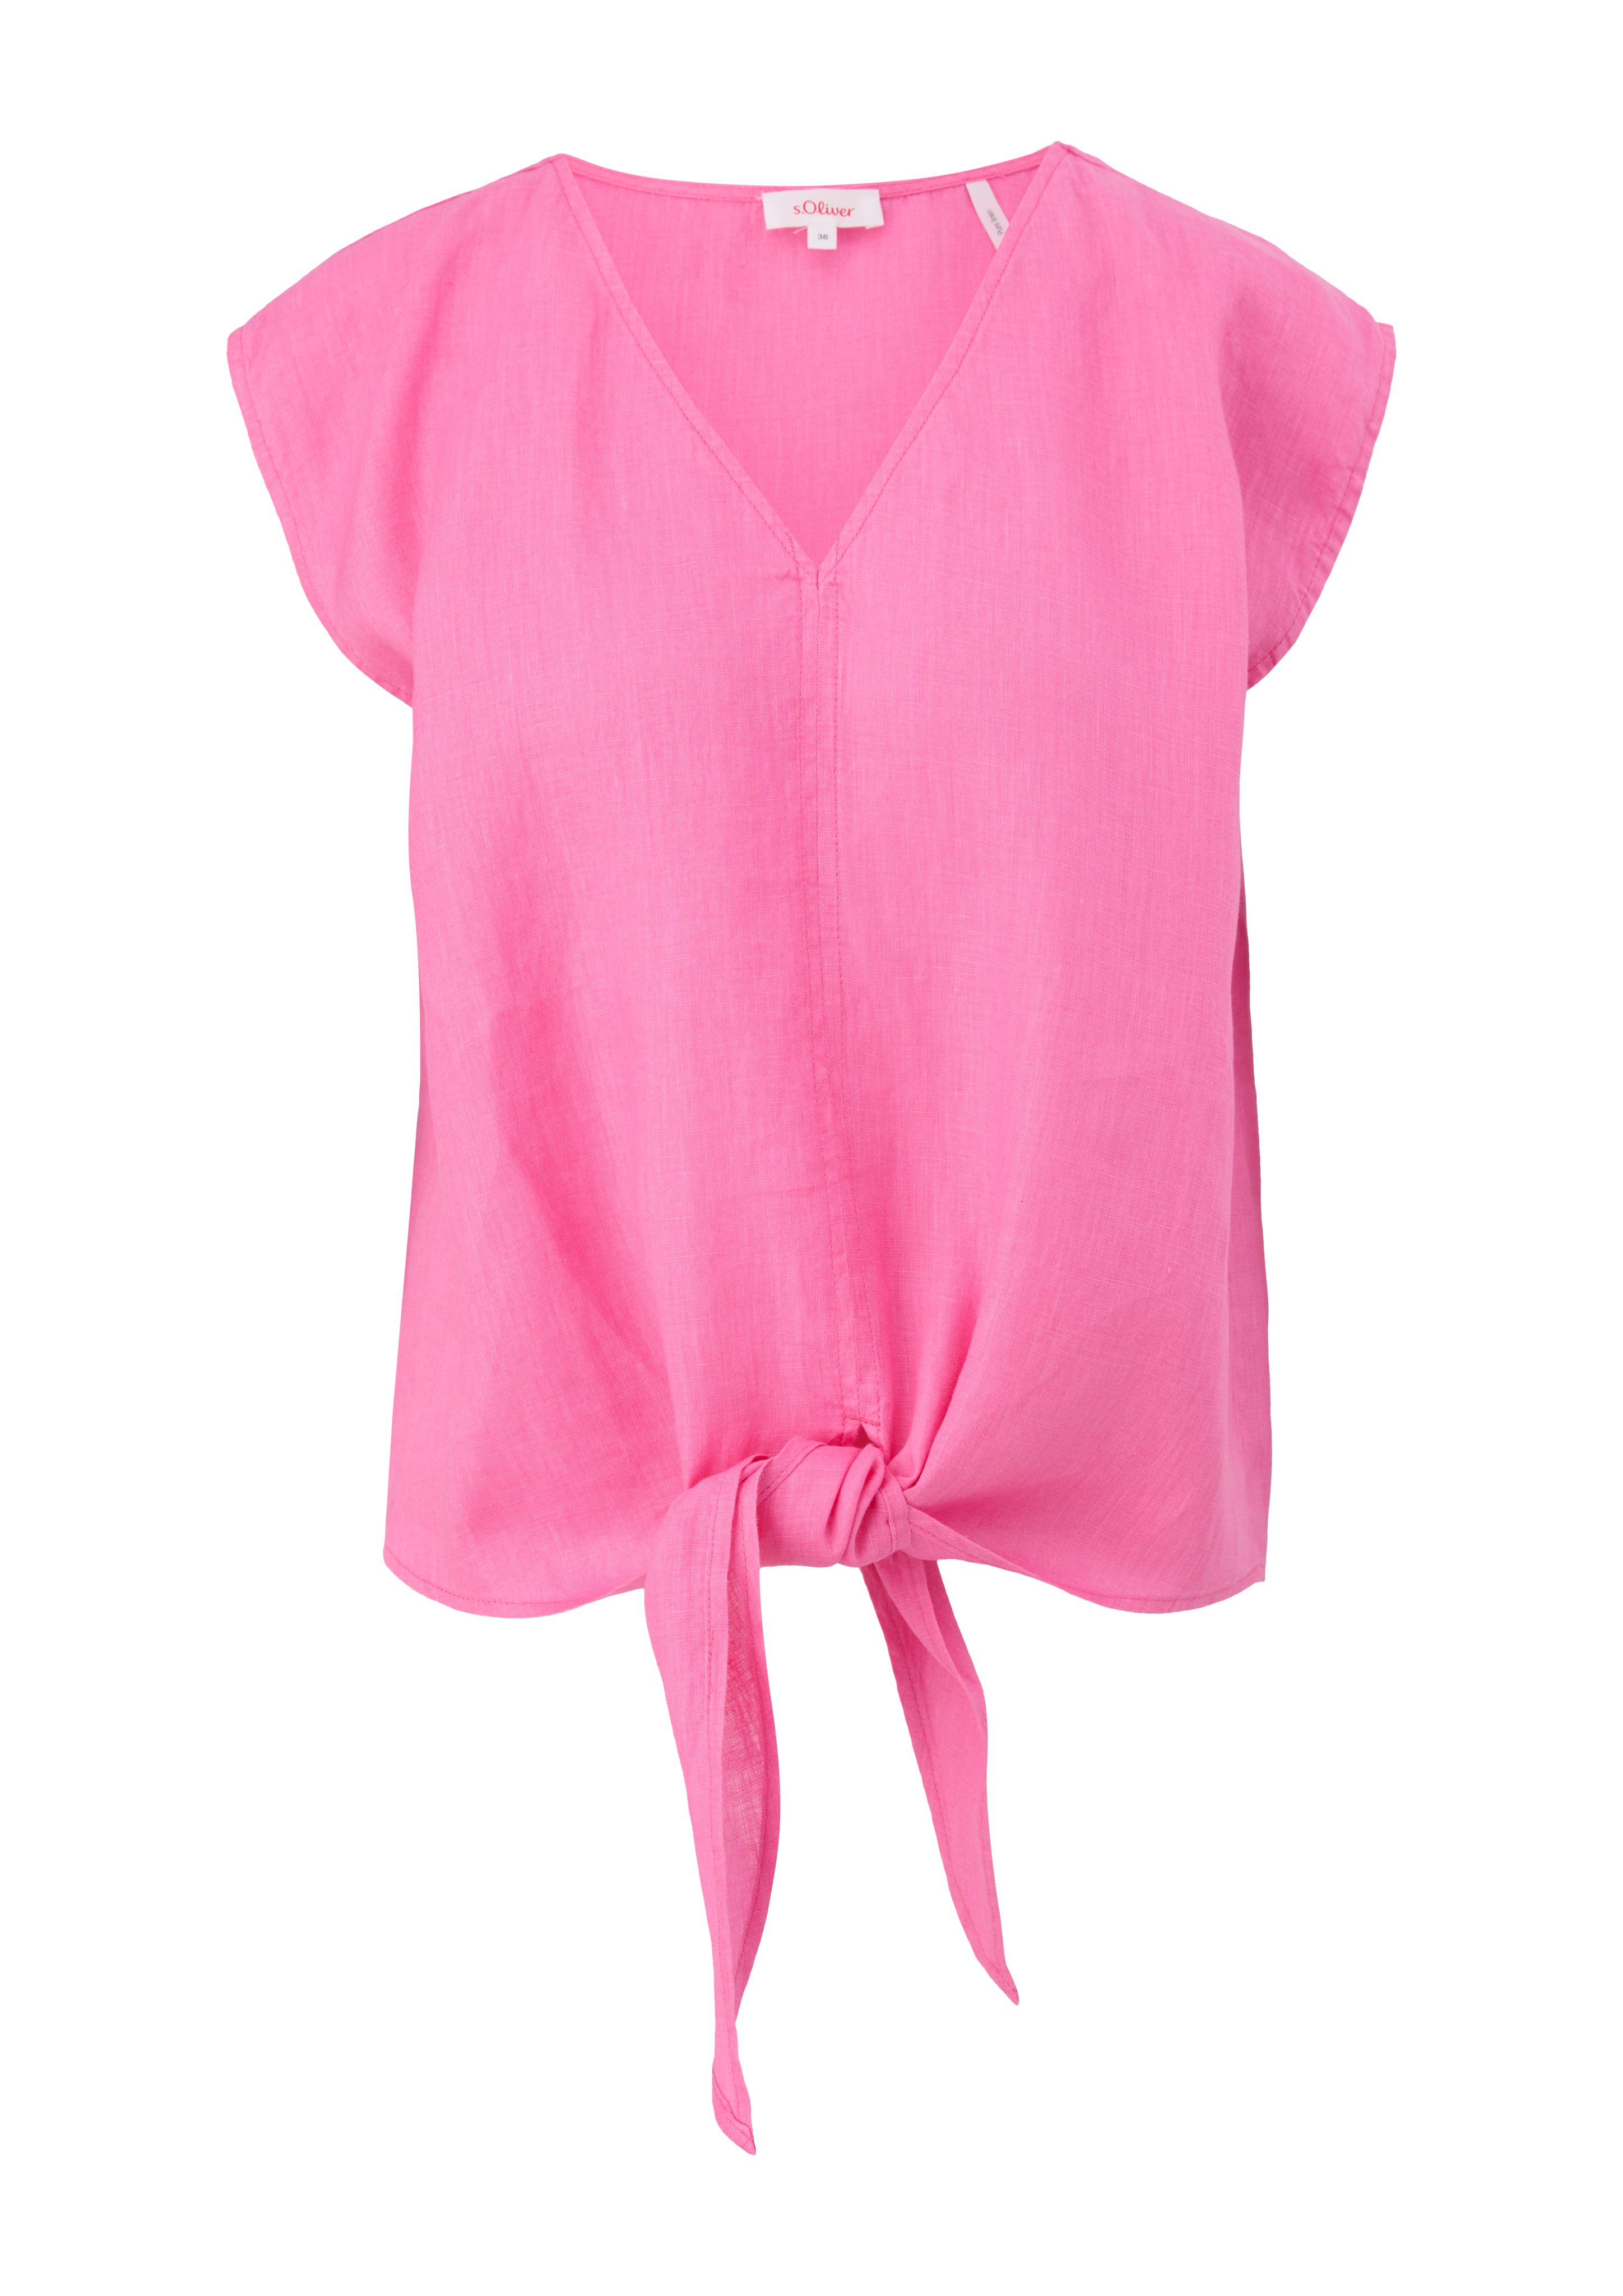 Bluse pink Blusentop mit Knoten Knoten-Detail s.Oliver